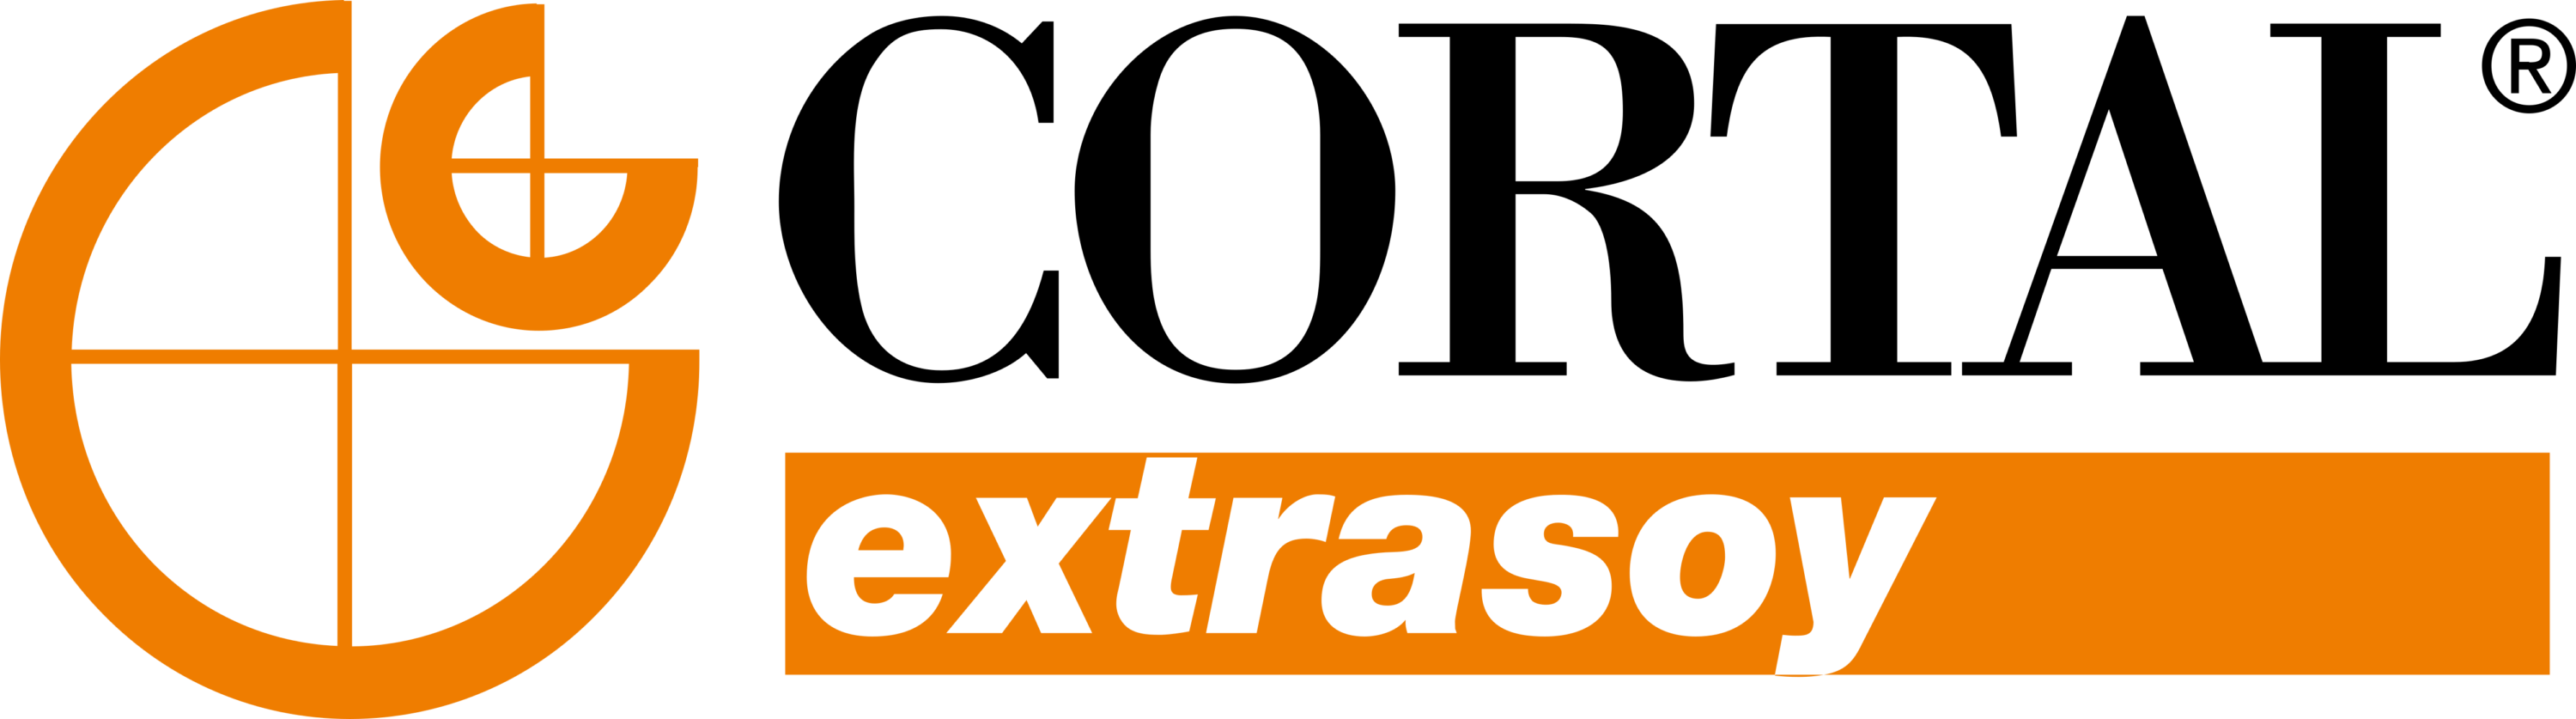 Cortal Extrasoy Logo